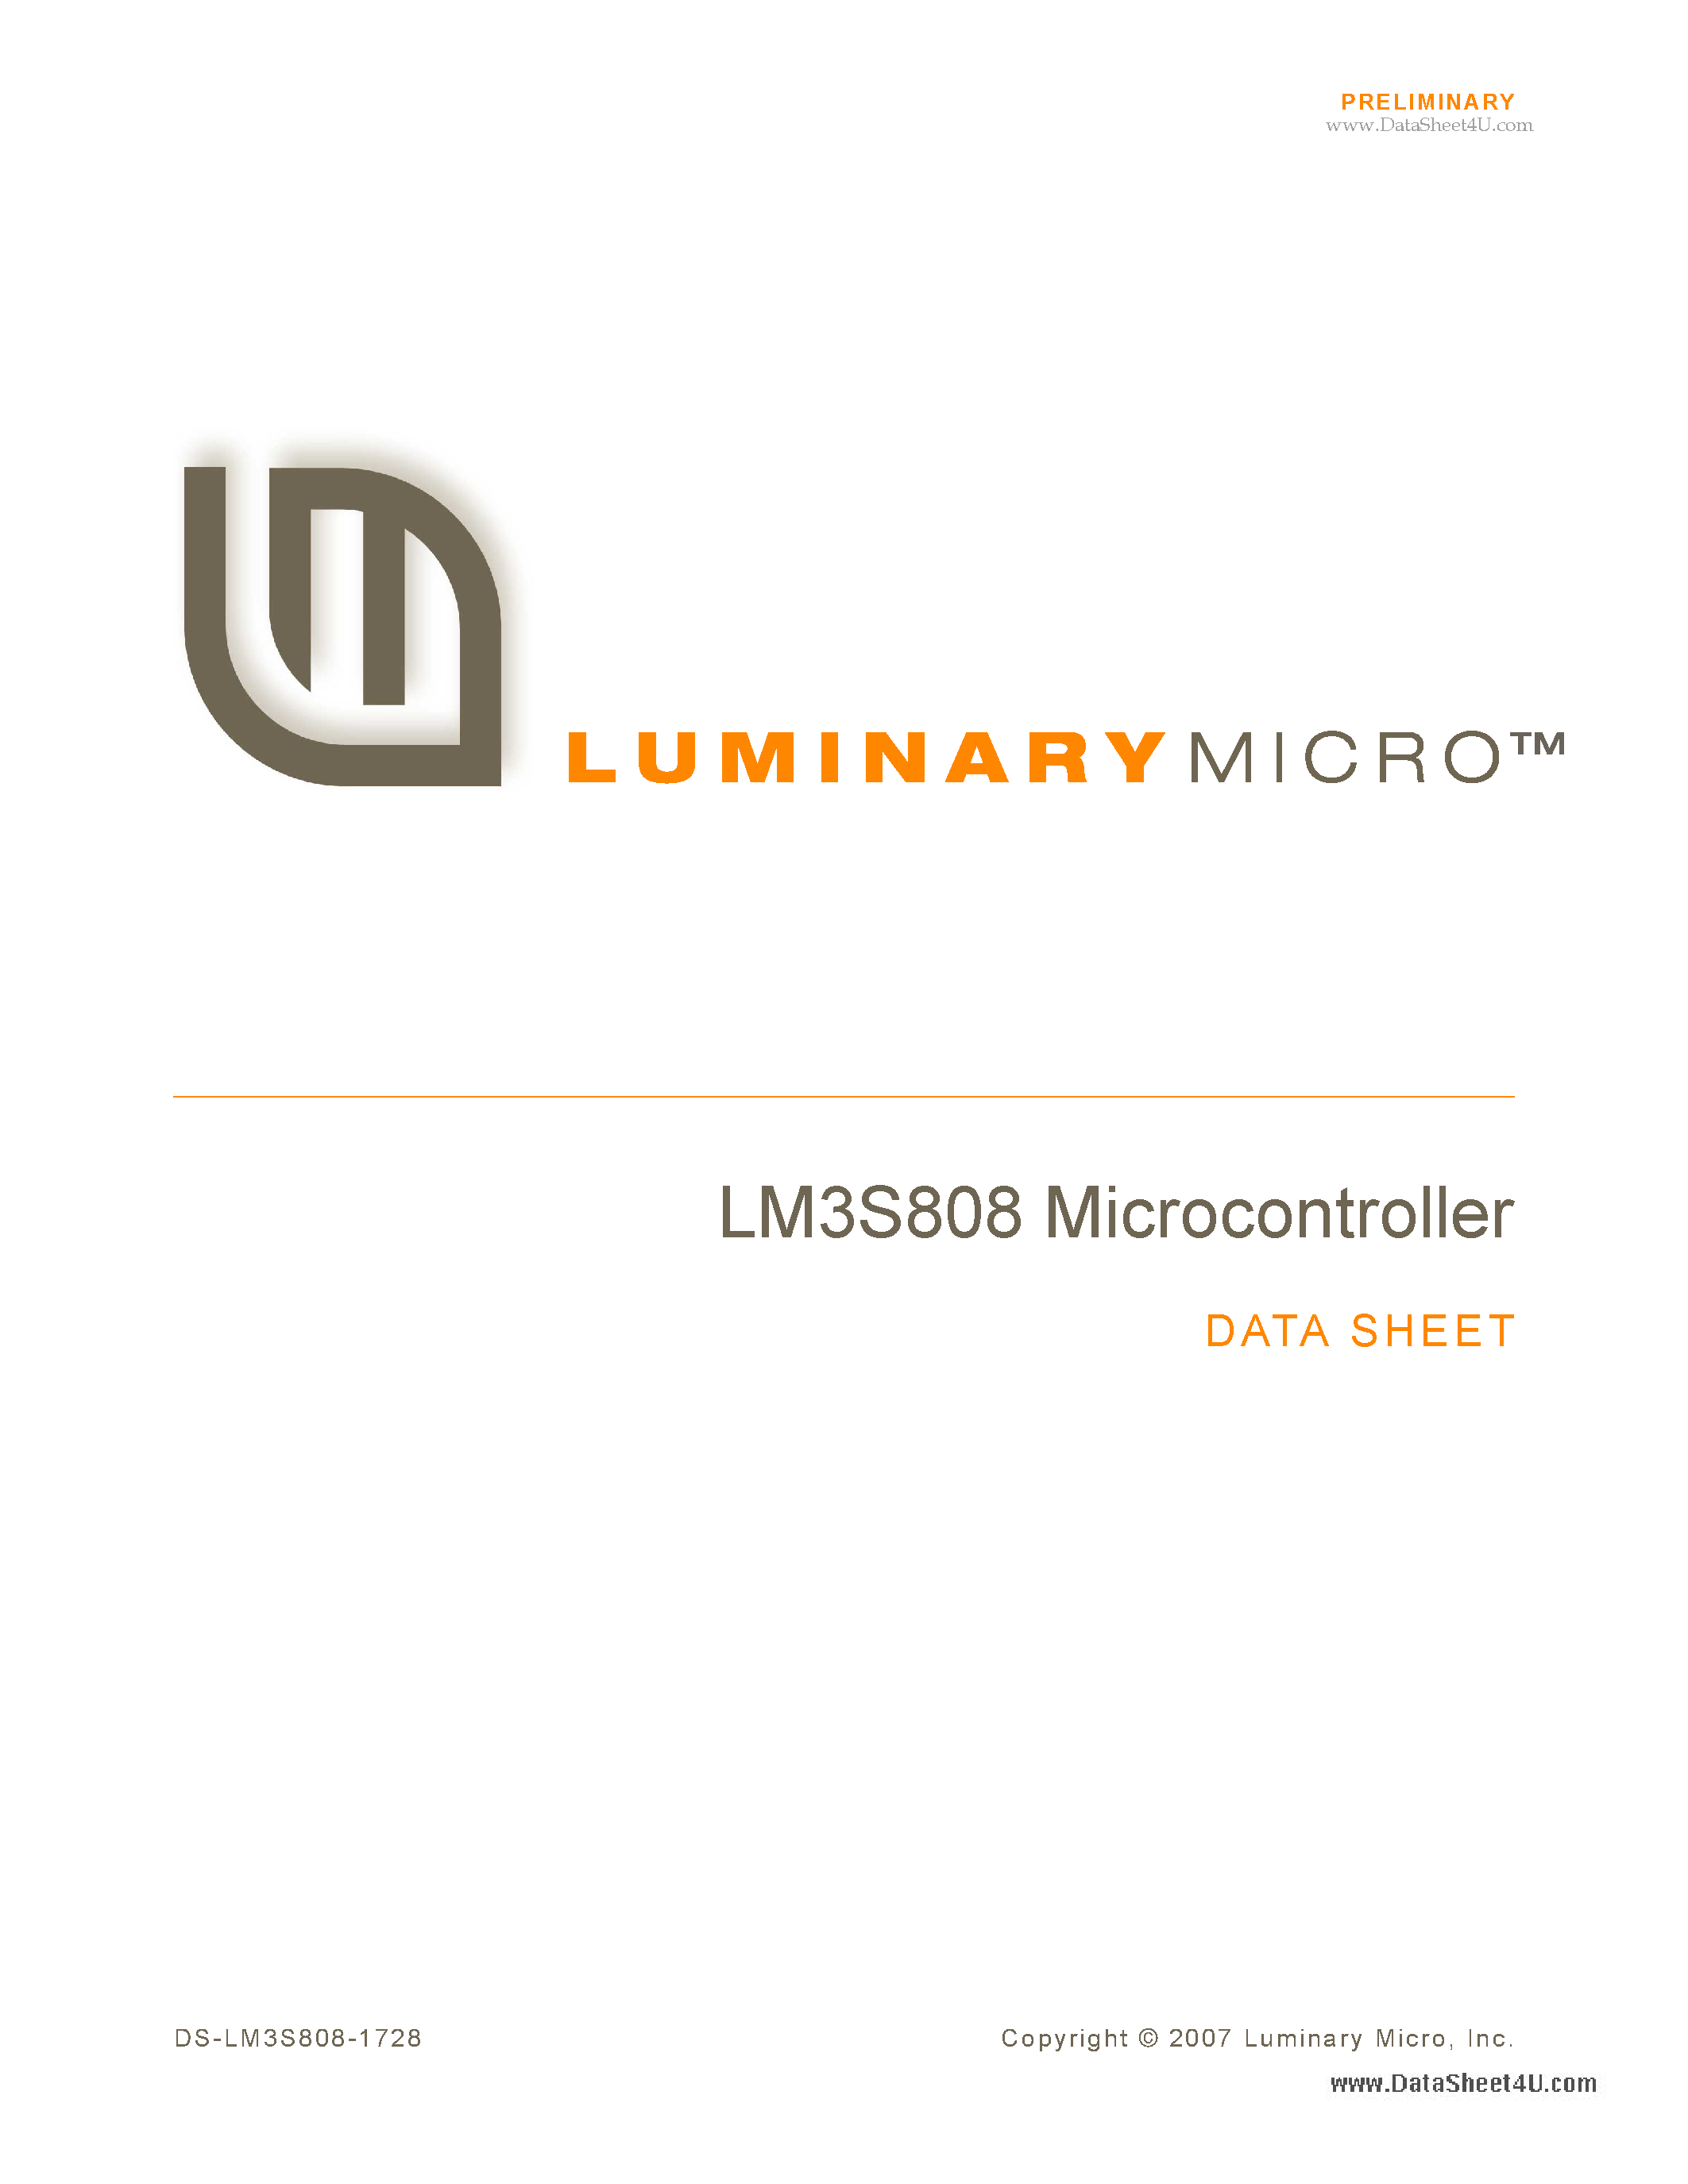 Даташит LM3S808 - Microcontroller страница 1